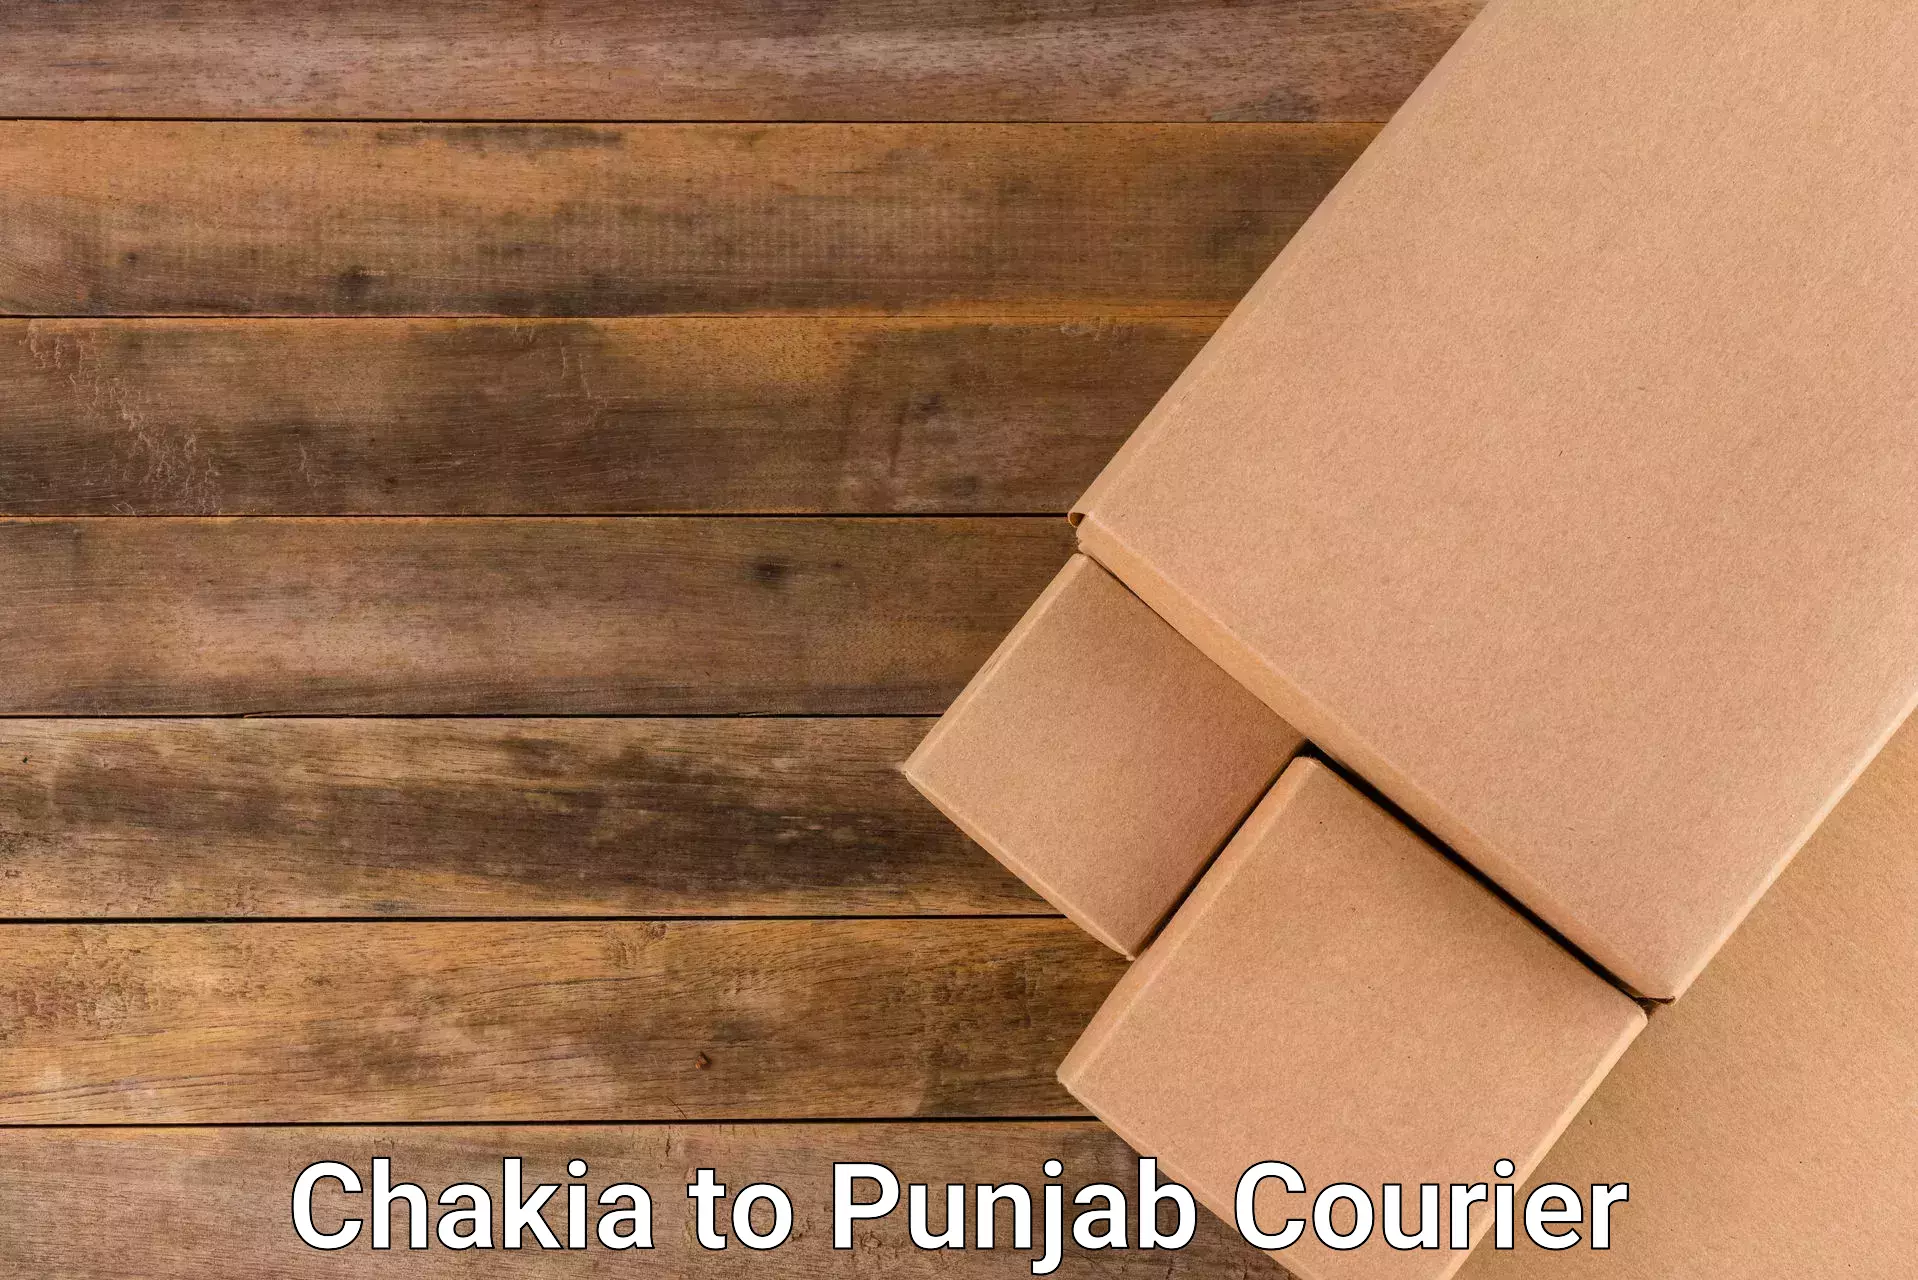 Modern courier technology Chakia to Punjab